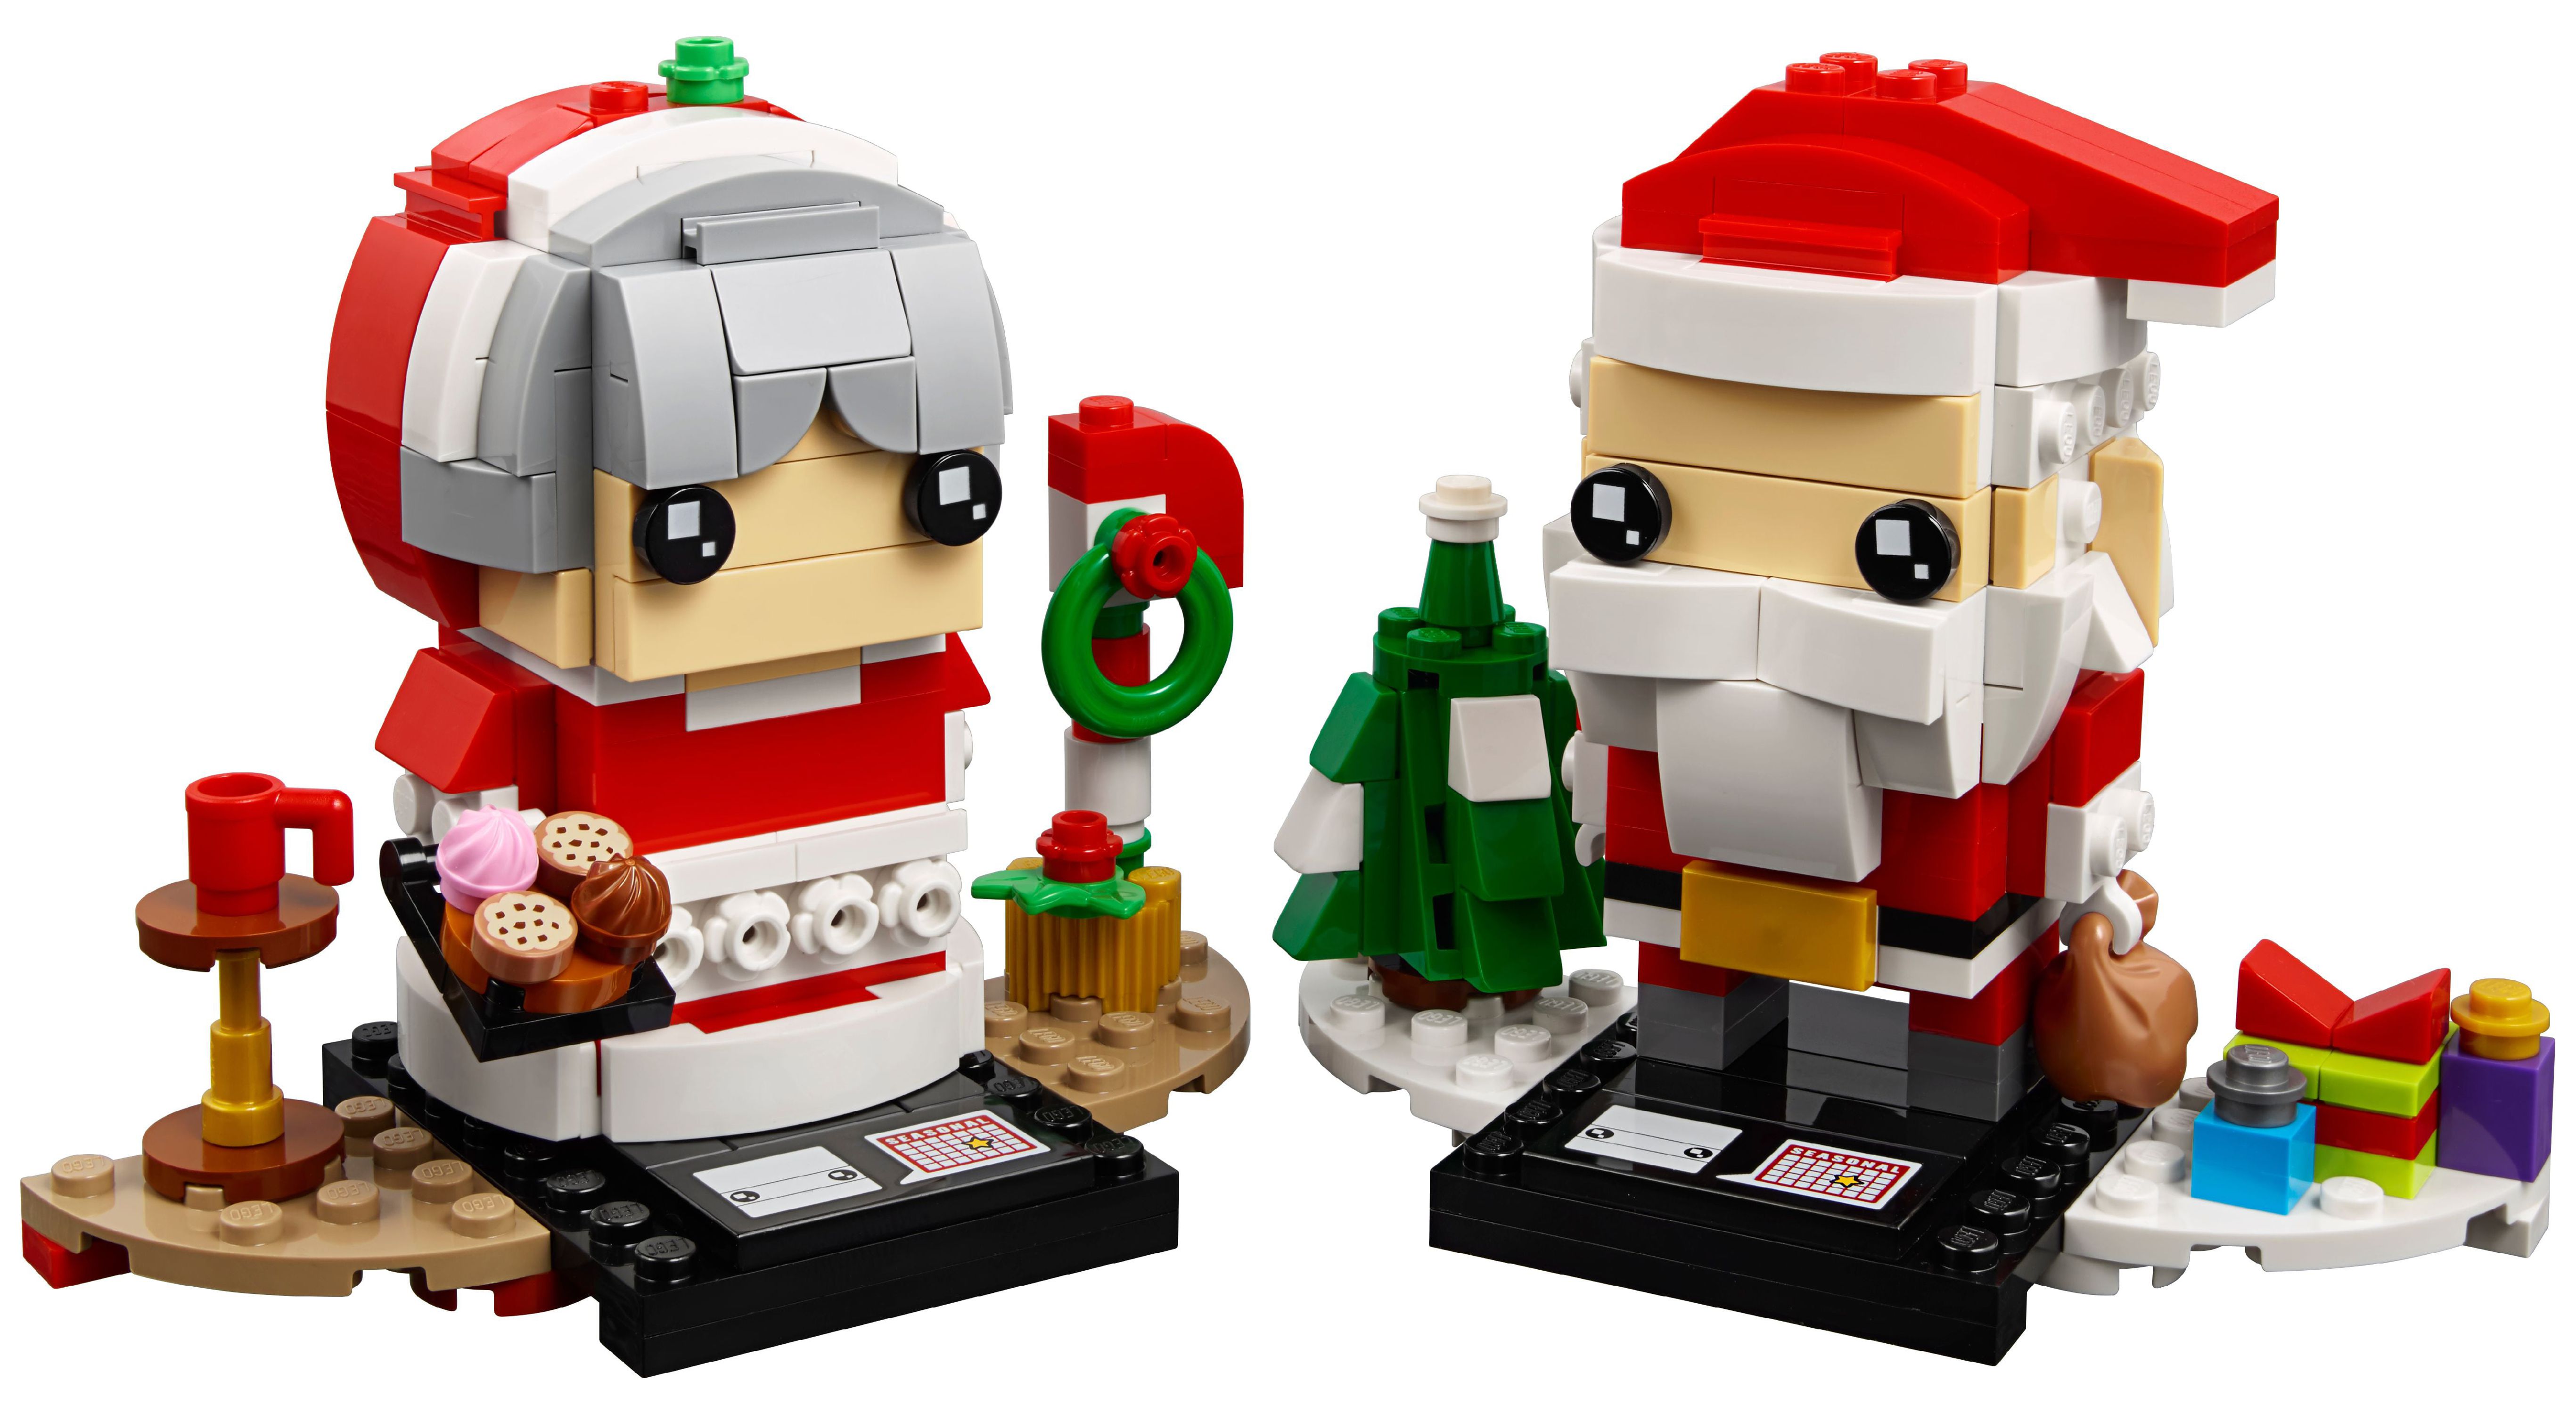 LEGO BrickHeadz Mr. & Mrs. Claus 40274 - image 2 of 6